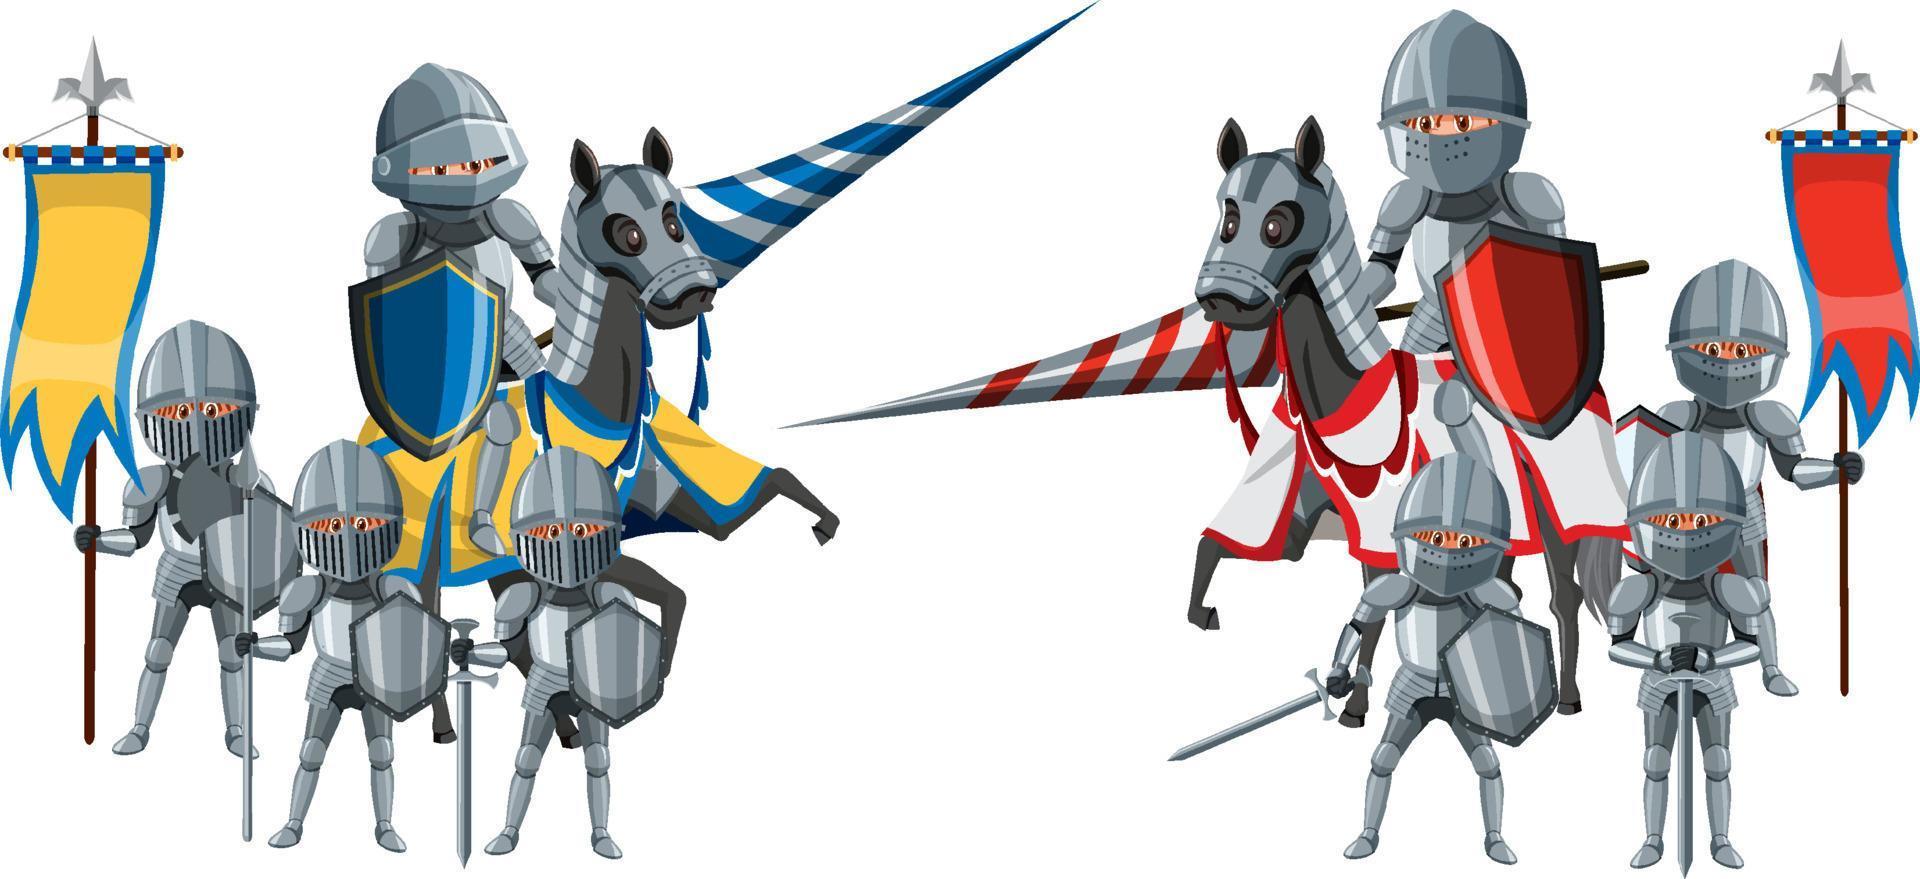 middeleeuws ridder steekspel toernooi op witte achtergrond vector